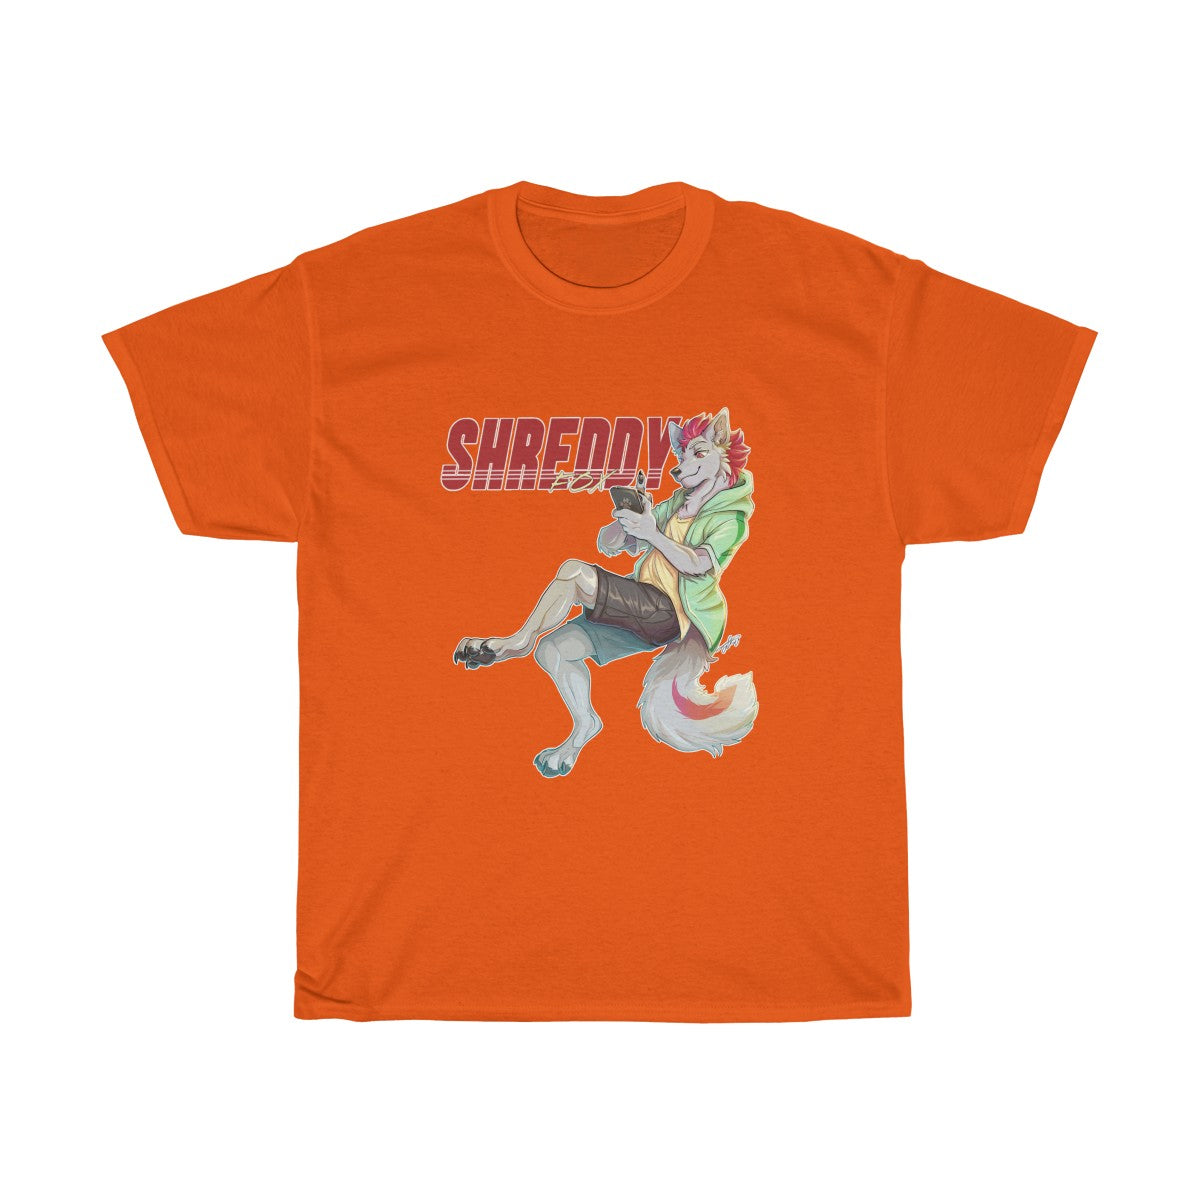 Scrolling - T-Shirt T-Shirt Shreddyfox Orange S 